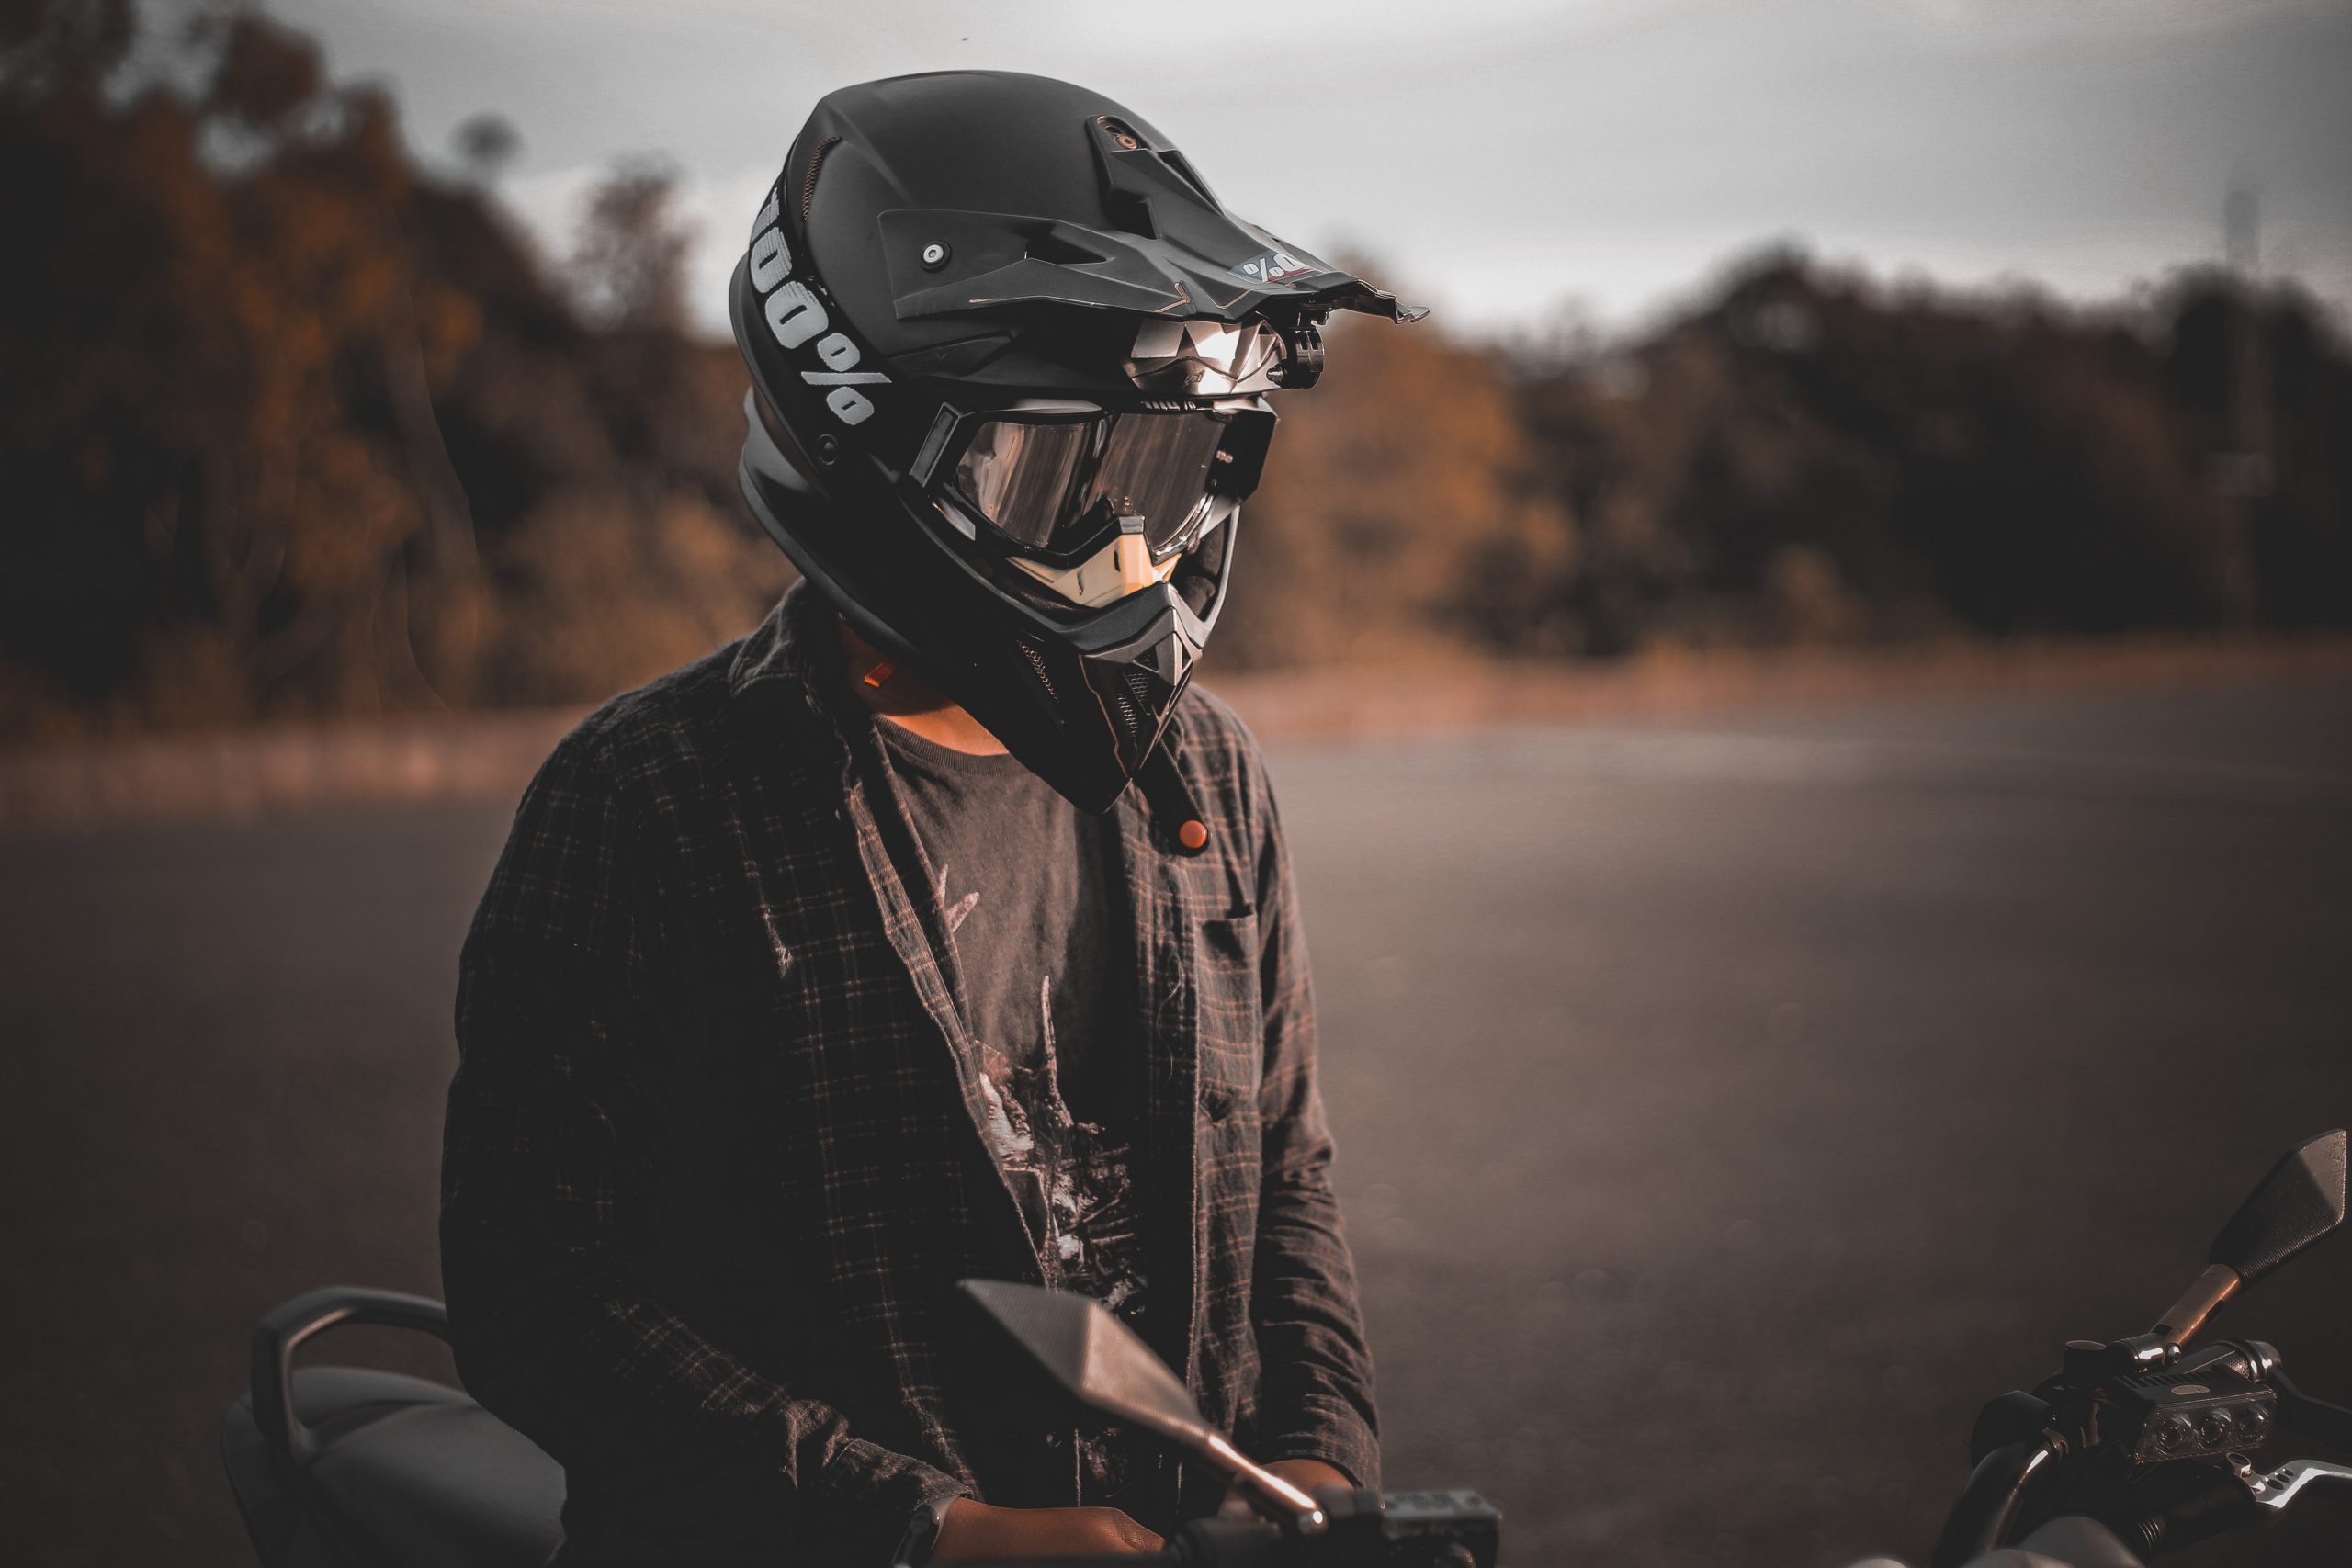 How to Buy the Best Helmets Under 300 Dollars